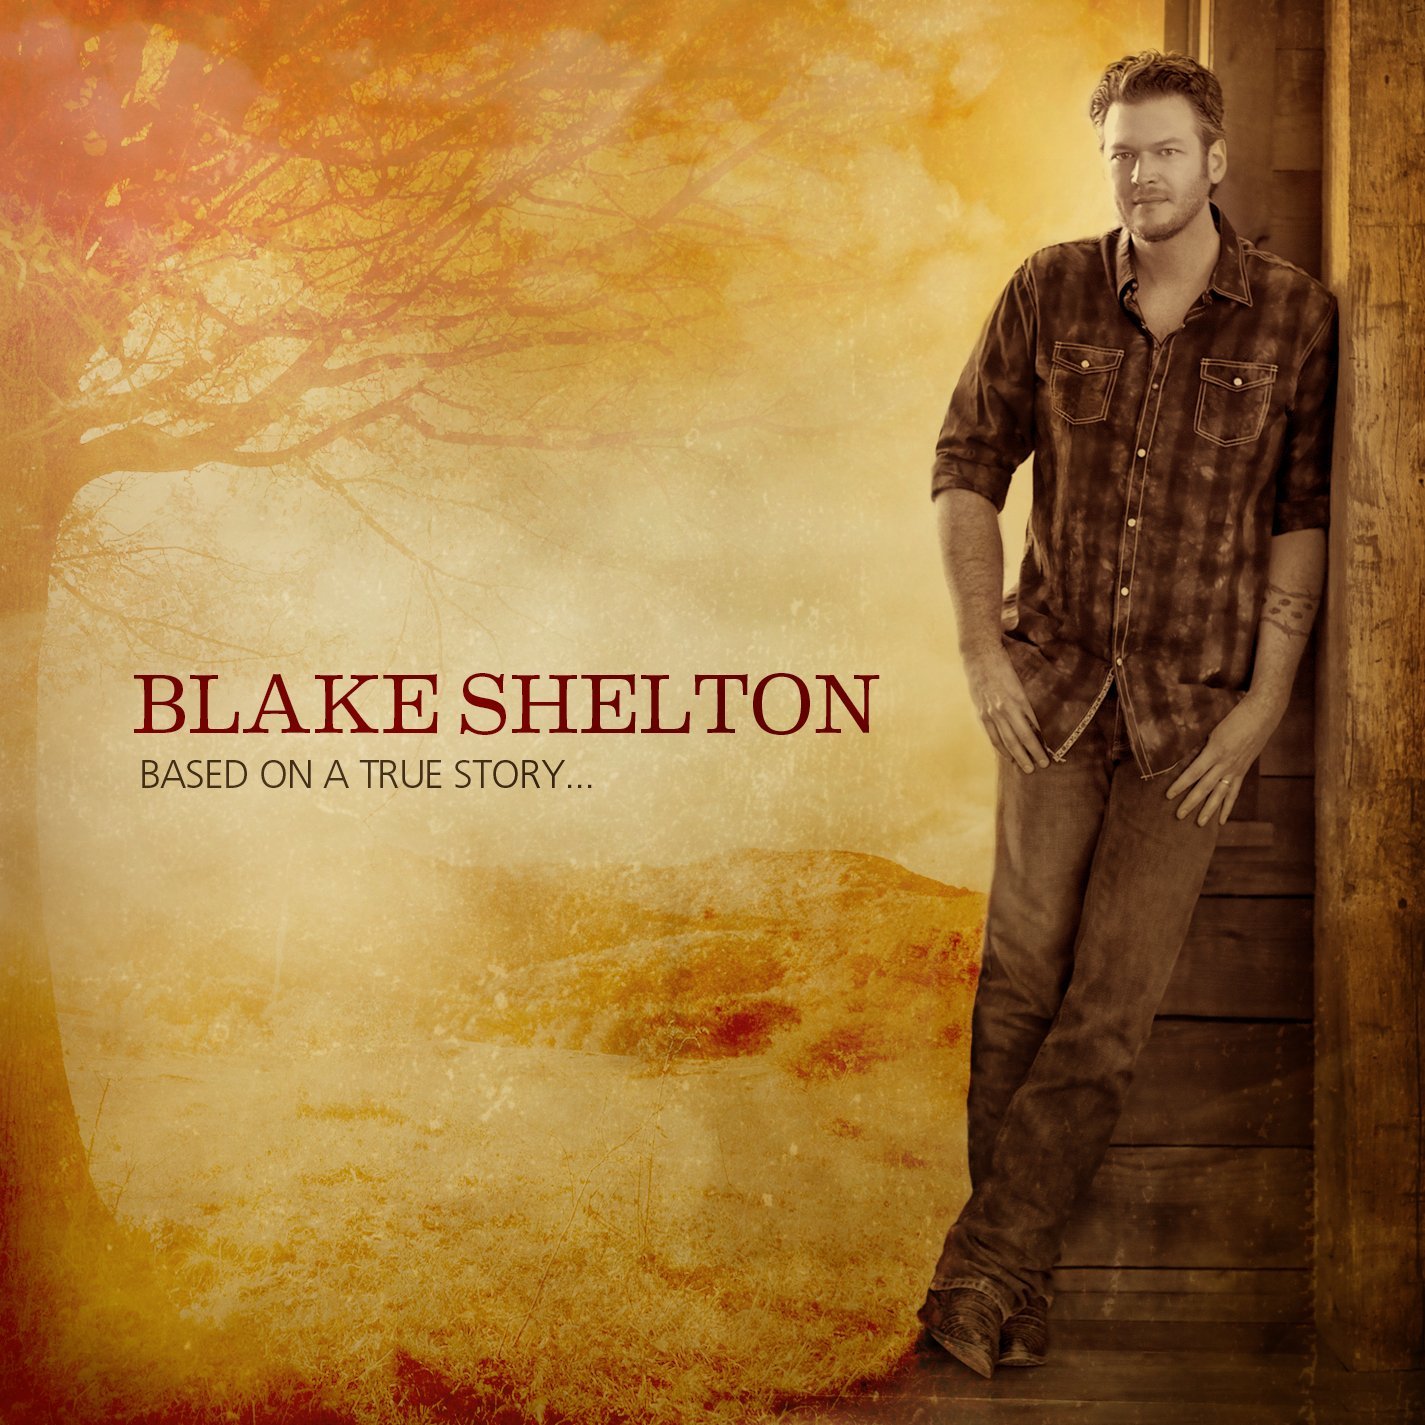 Blake Shelton: Based on a True Story